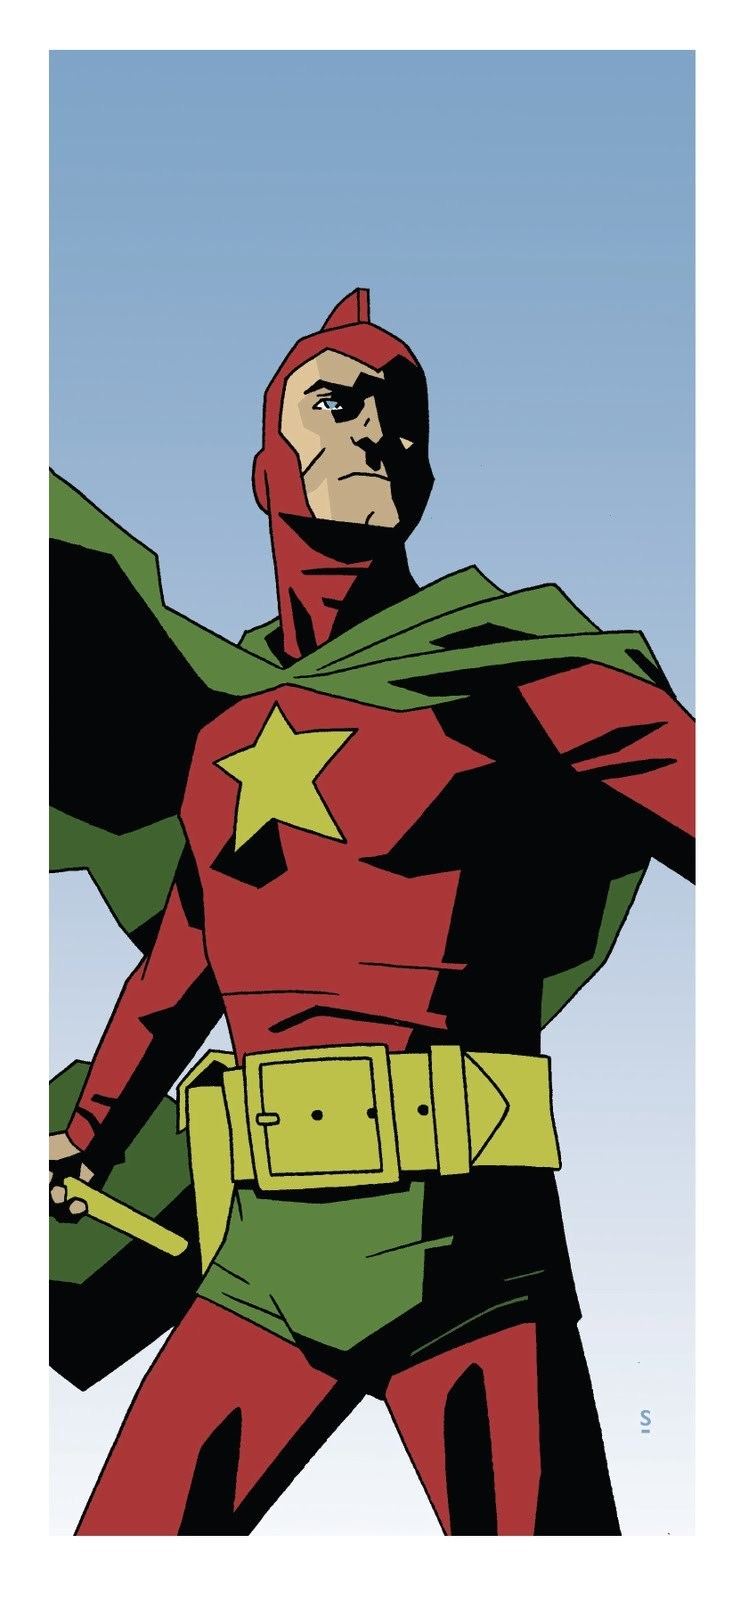 Starman (Ted Knight) Starman Ted Knight DC Comics Geek Pinterest Ted knight and